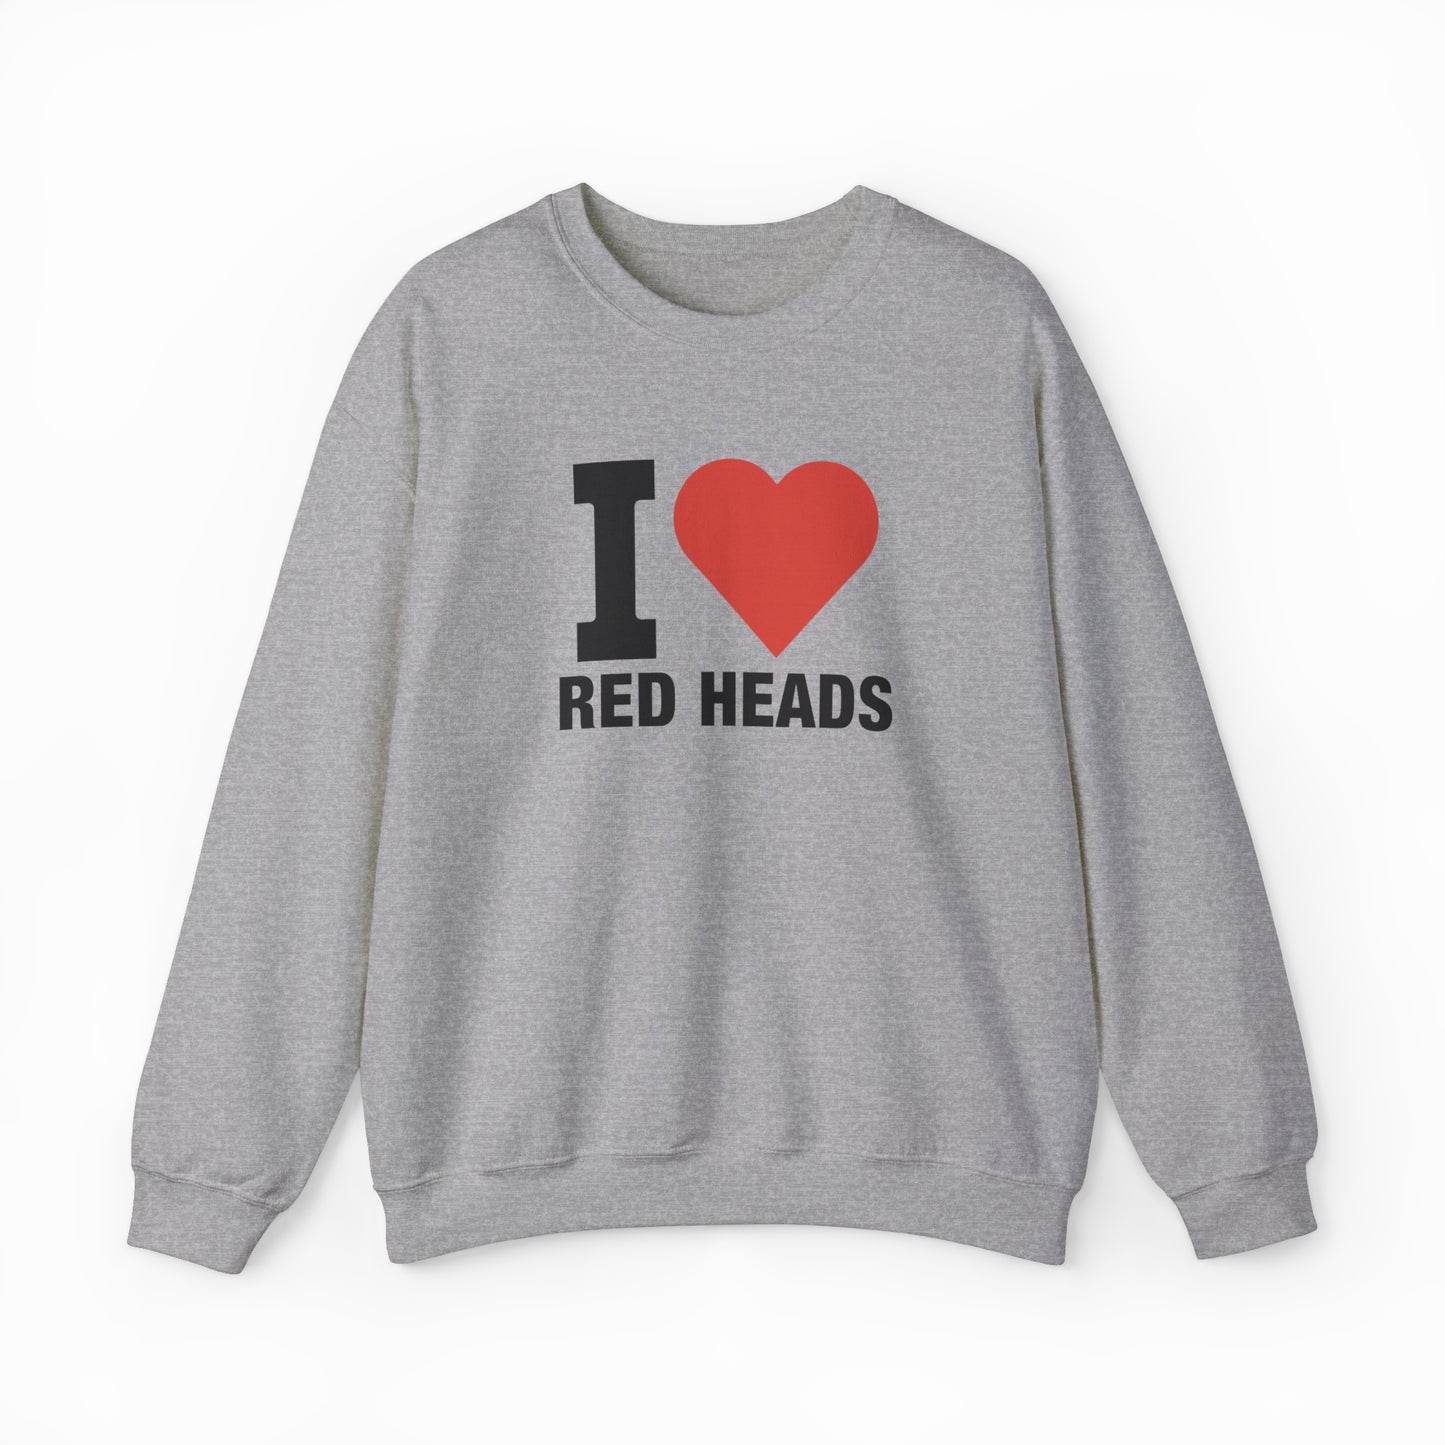 I Heart Red Heads Crewneck